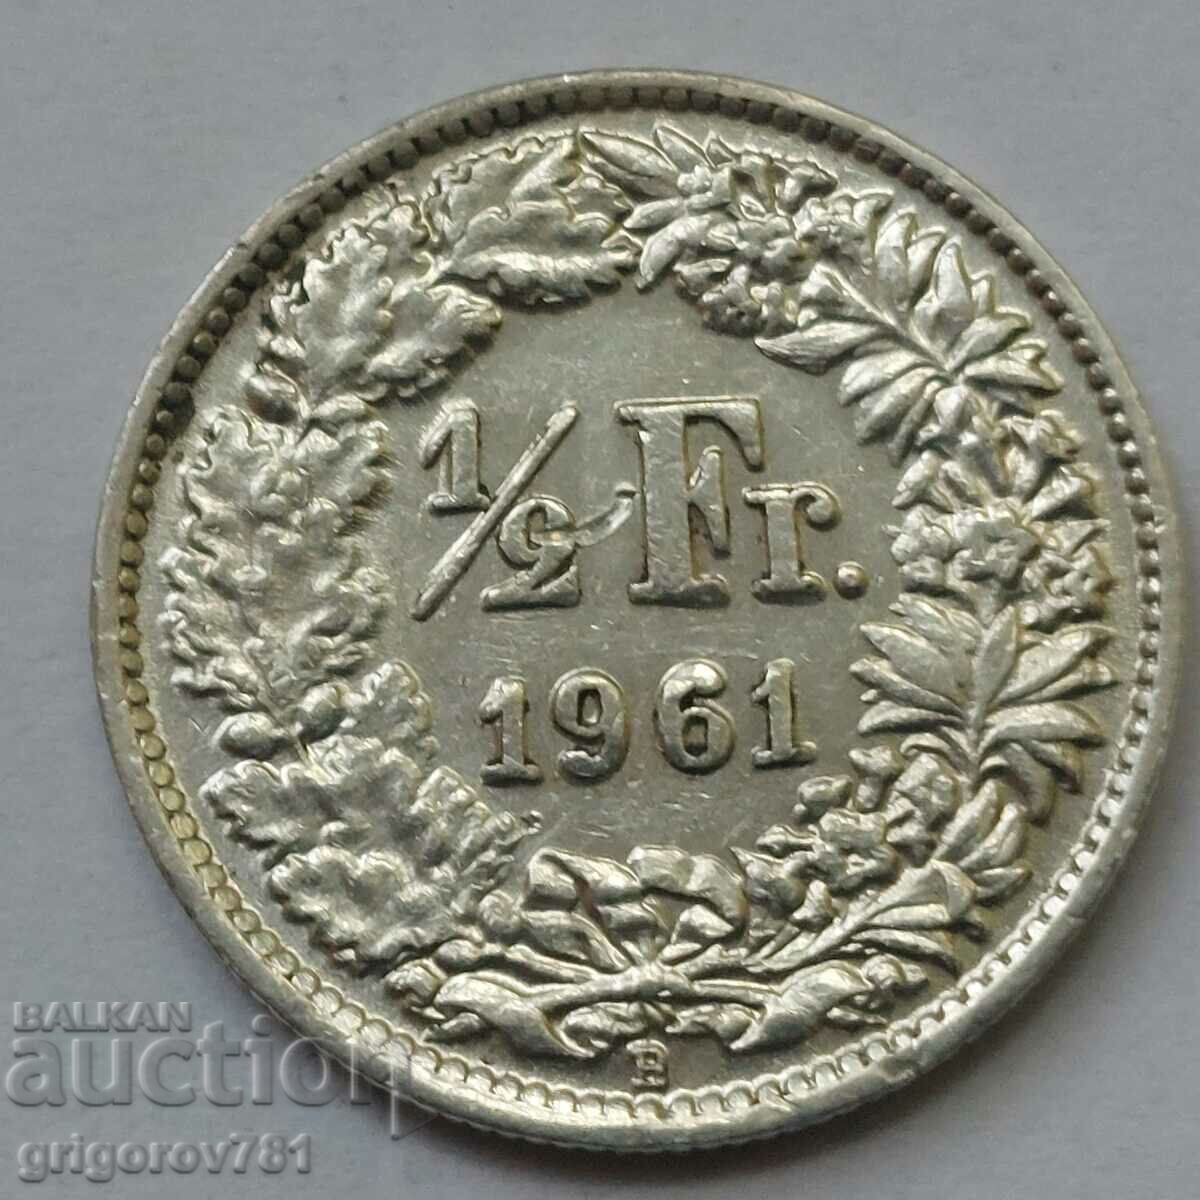 1/2 Franc Silver Switzerland 1961 B - Silver Coin #95